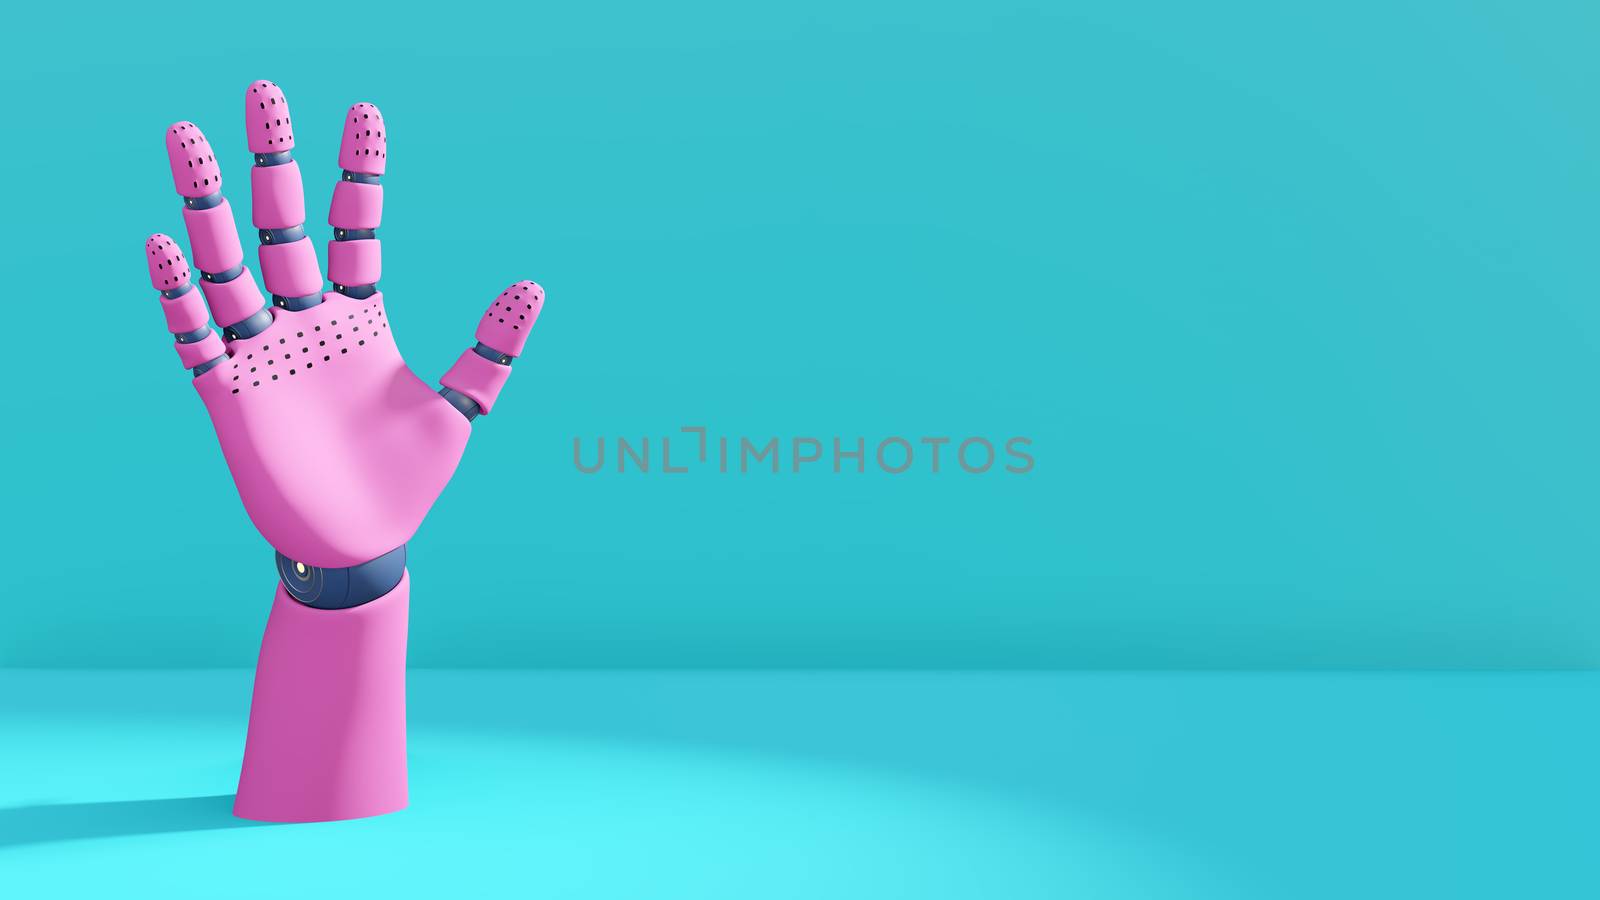 3D illustration, robot hand mannequin body part, pink blue pastel colors. Trend design